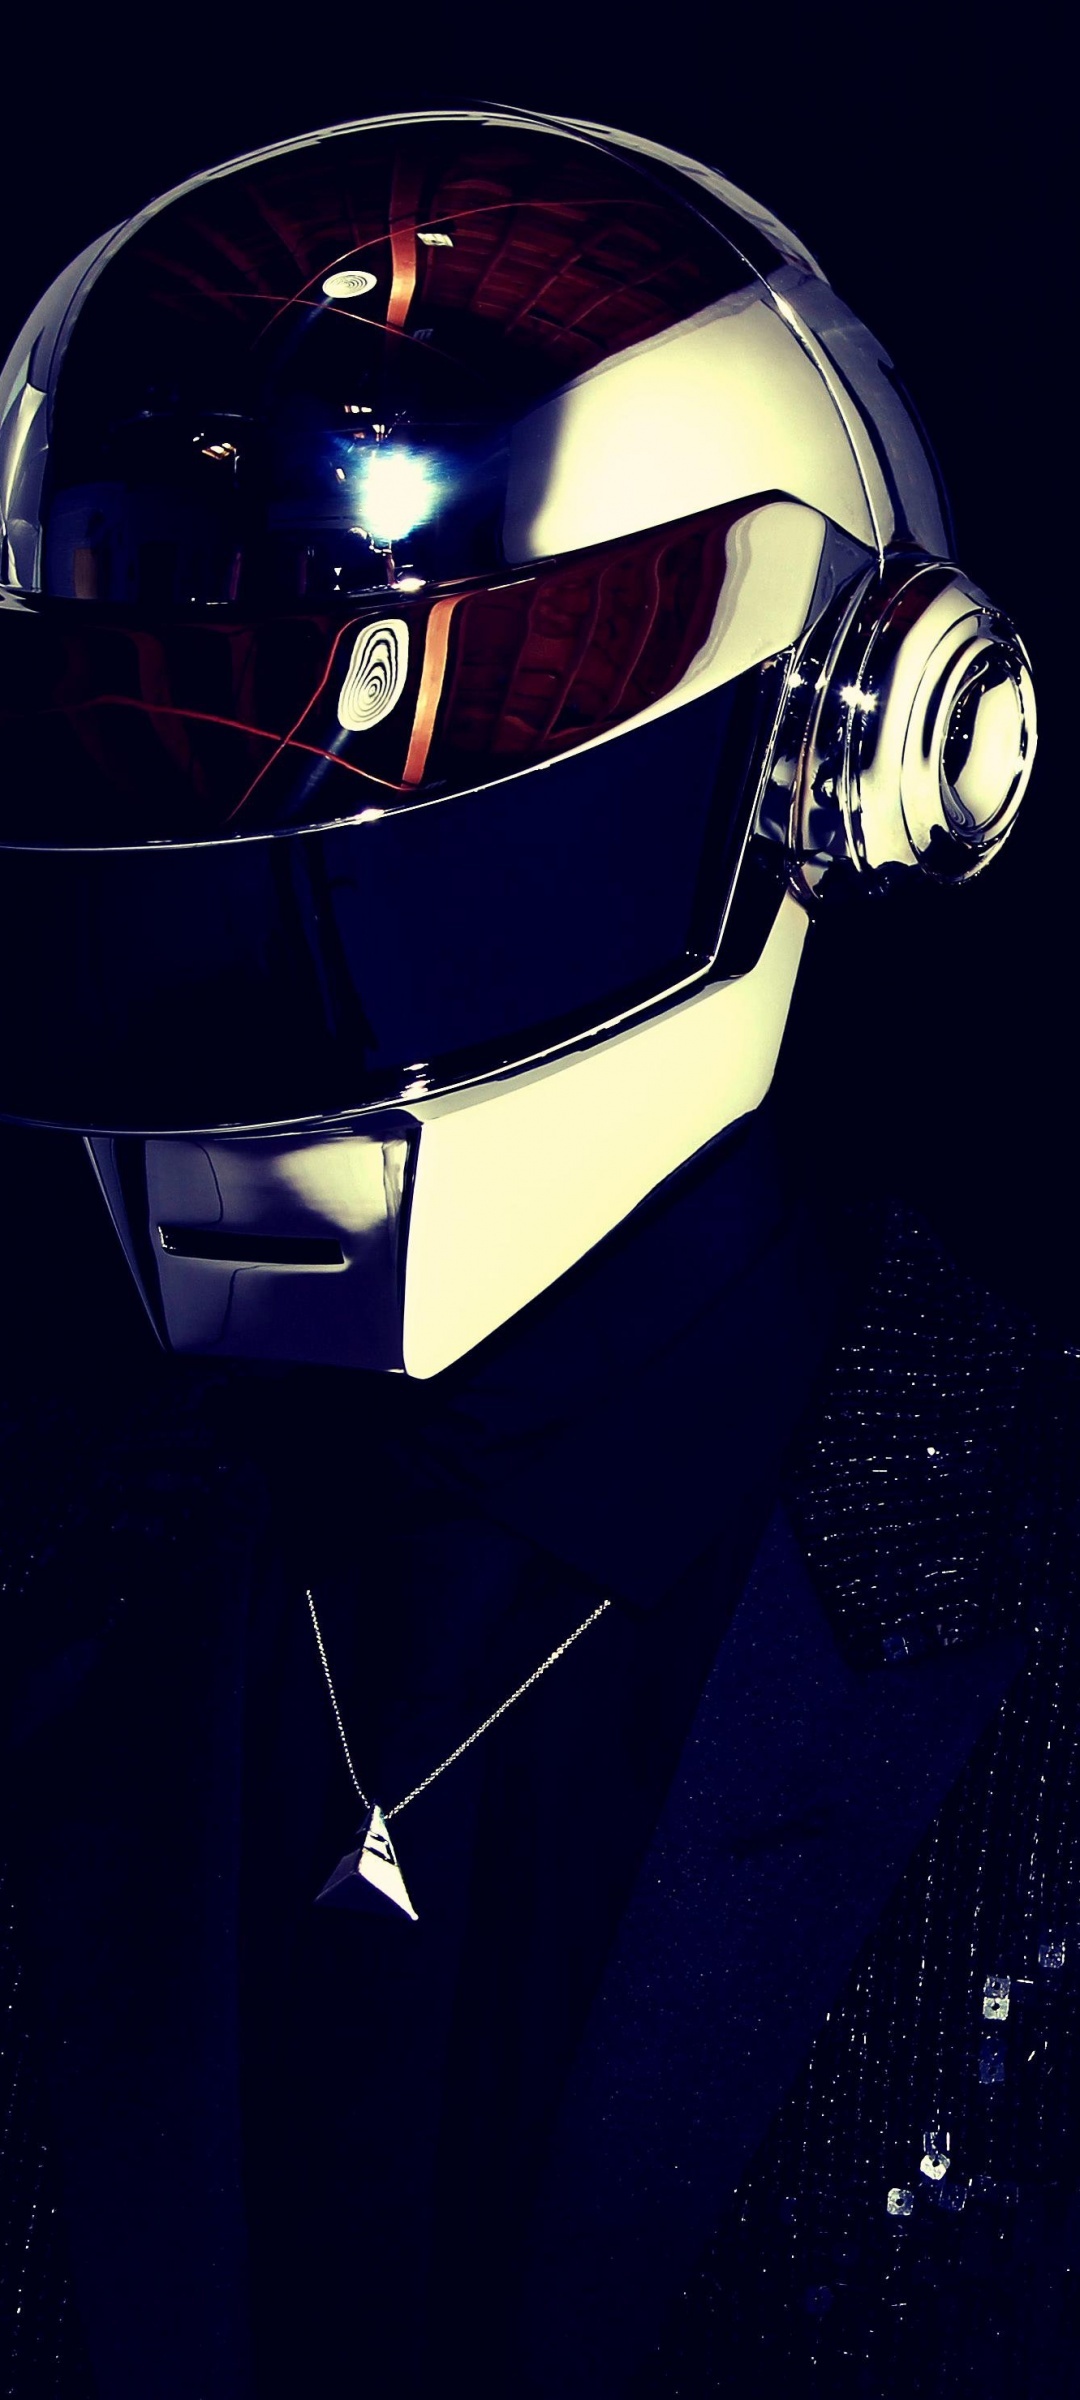 Daft Punk, Electronic music duo, Black background, Dark ambiance, 1080x2400 HD Handy